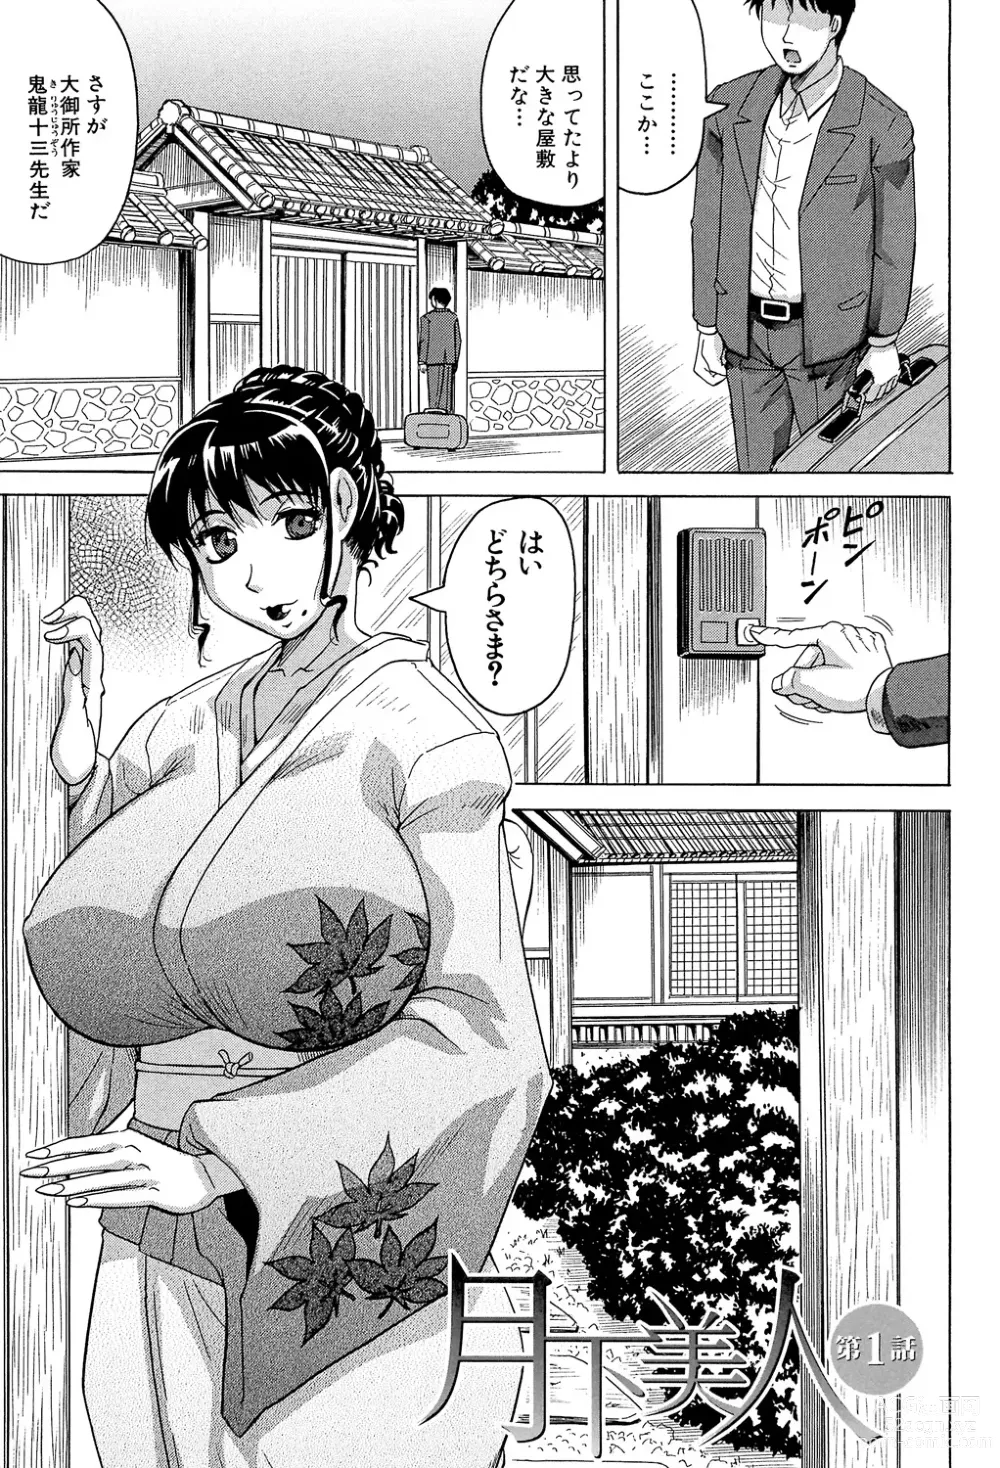 Page 7 of manga Oyako no Utage